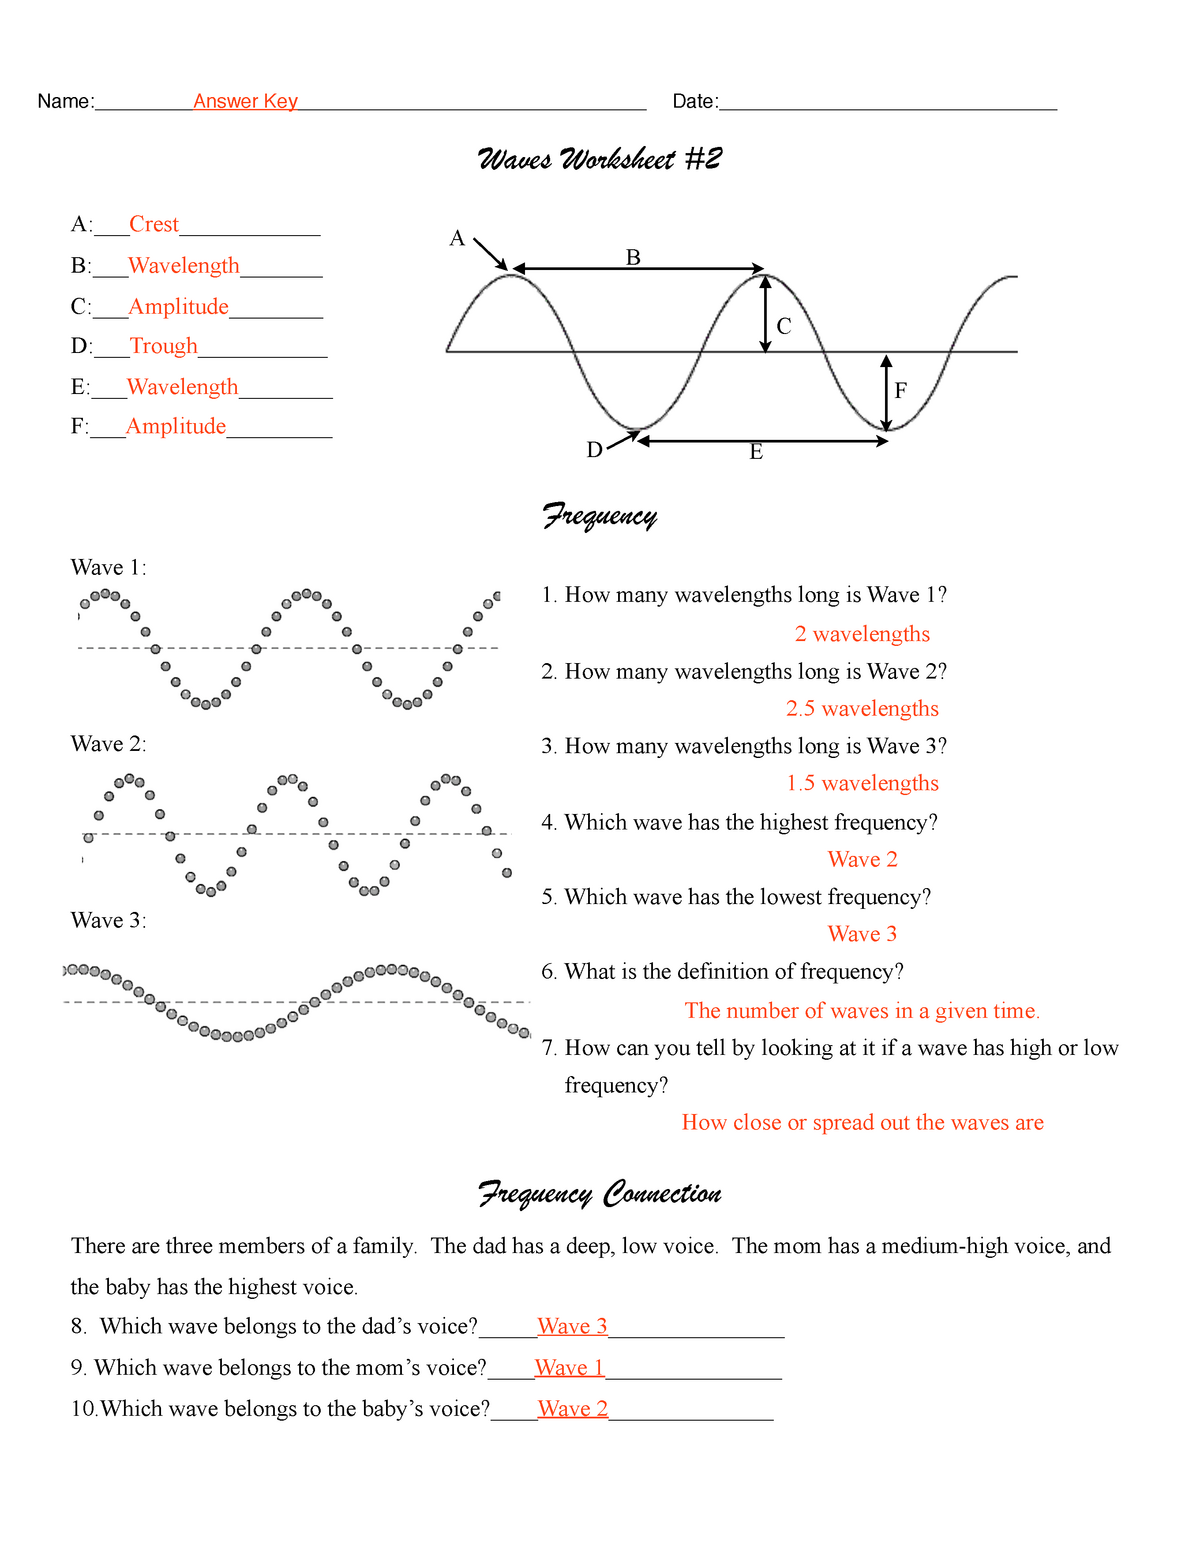 21 wave worksheet answer pdf - Waves Worksheet A Throughout Waves Worksheet 1 Answers